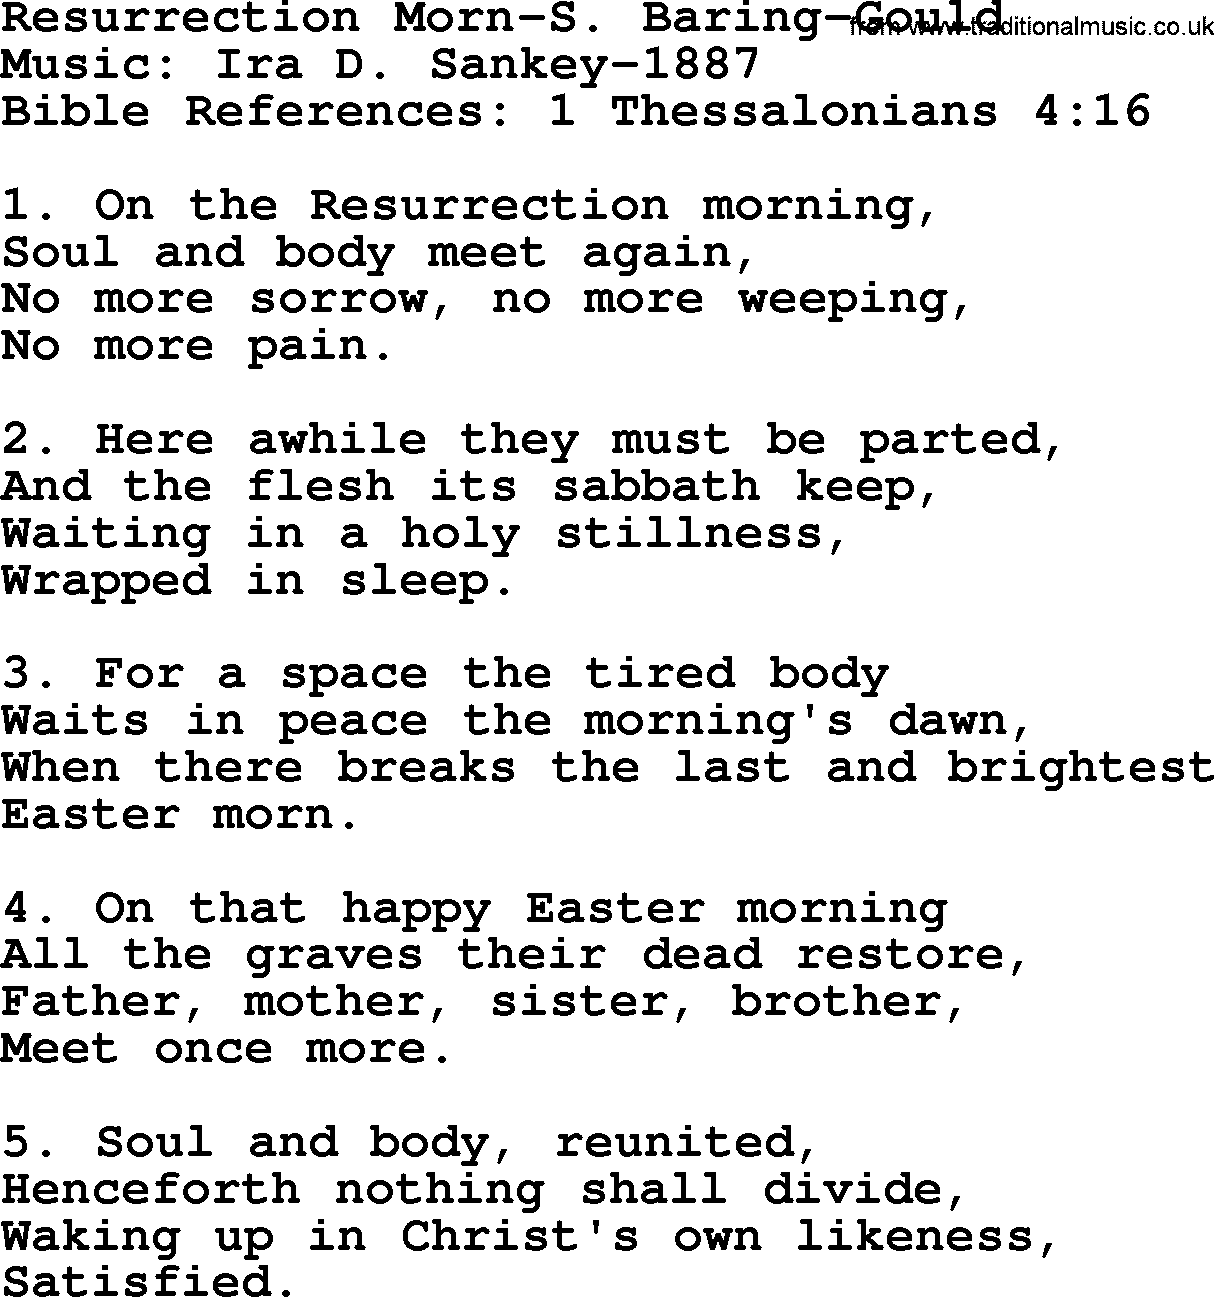 Ira Sankey hymn: Resurrection Morn-Ira Sankey, lyrics